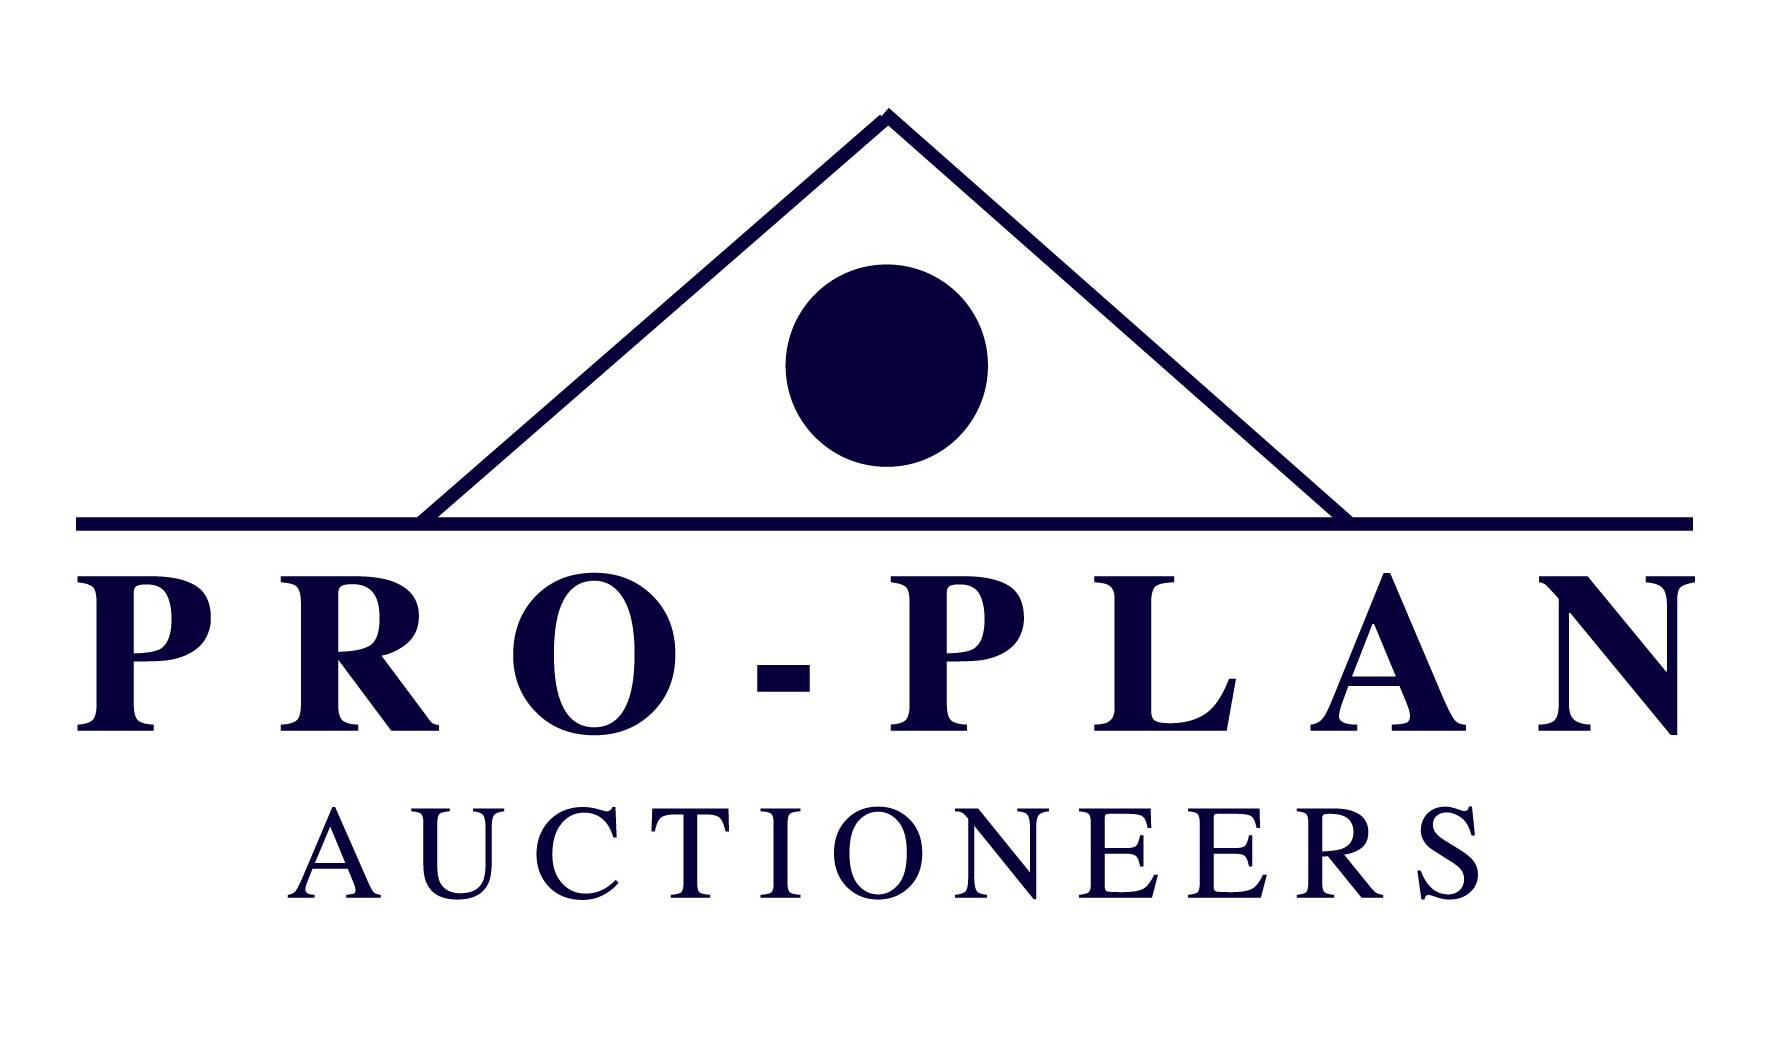 Pro-Plan Auctioneers